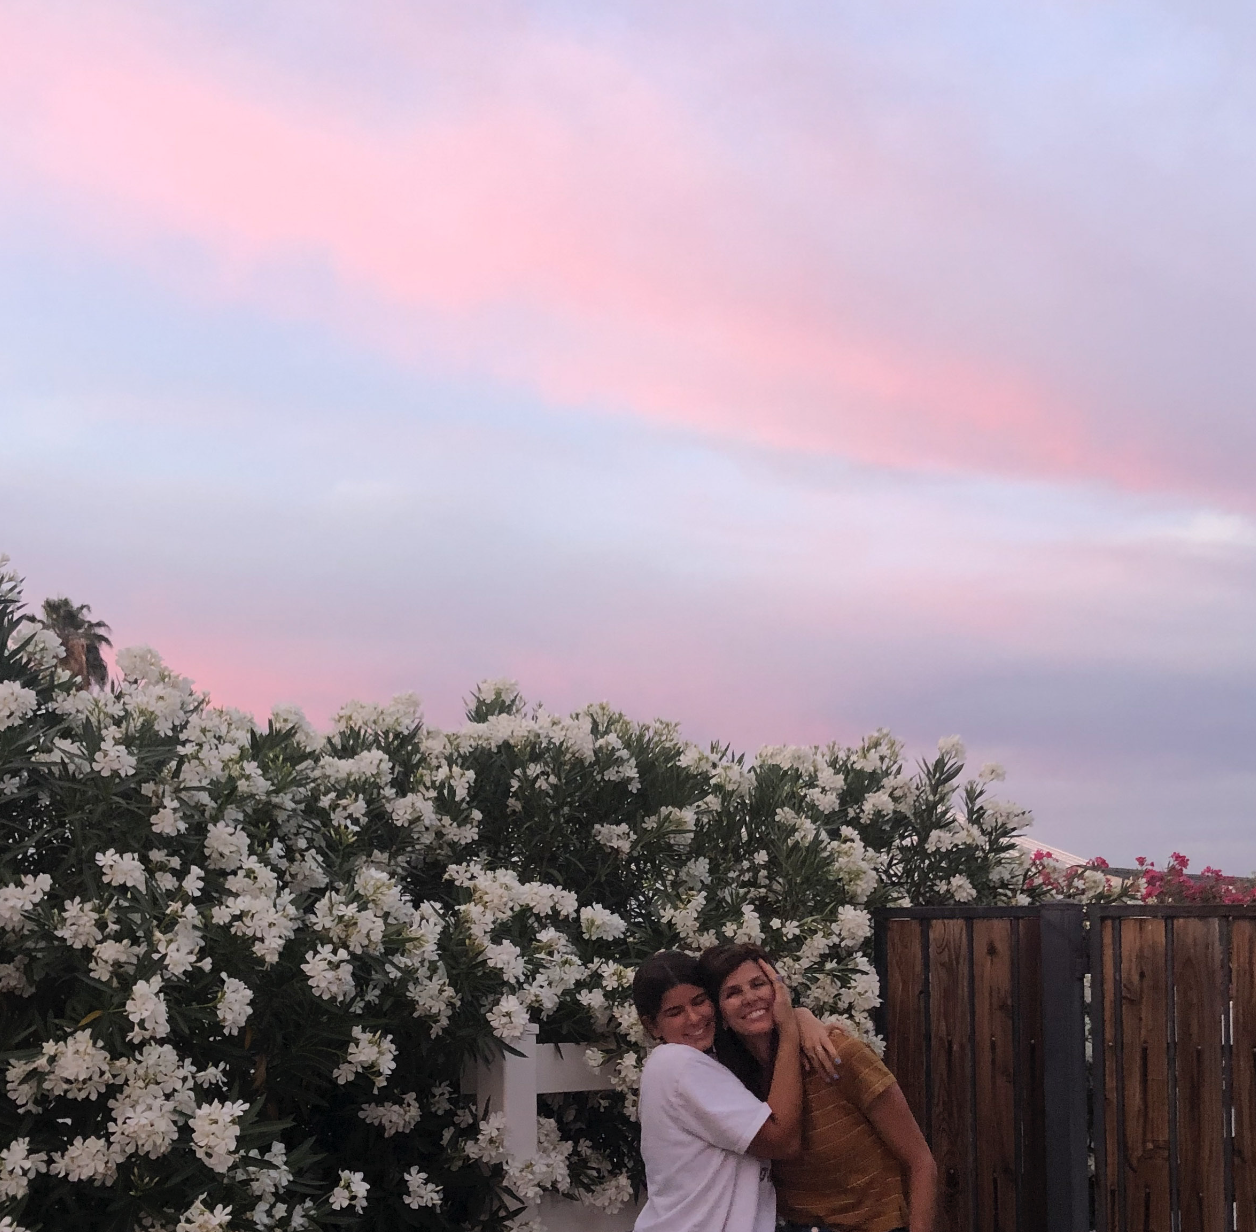 Grace hugging Shawni under a pink sunset sky